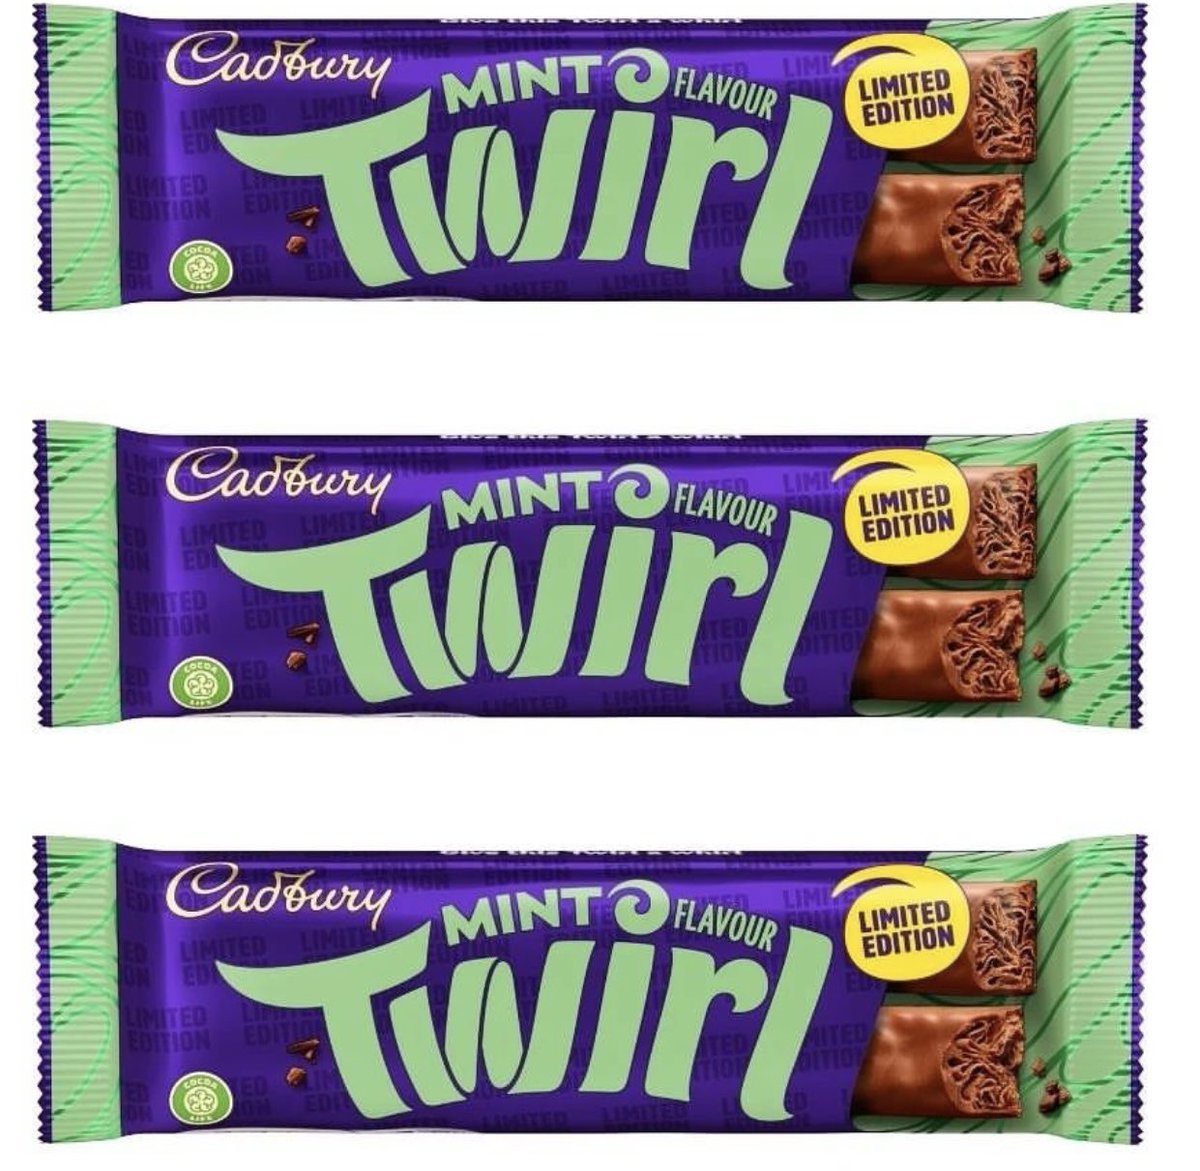 New Cadbury Mint Twirl - available 24th April. #chocolate #cadbury #cadburys #snacks #sweets #candy